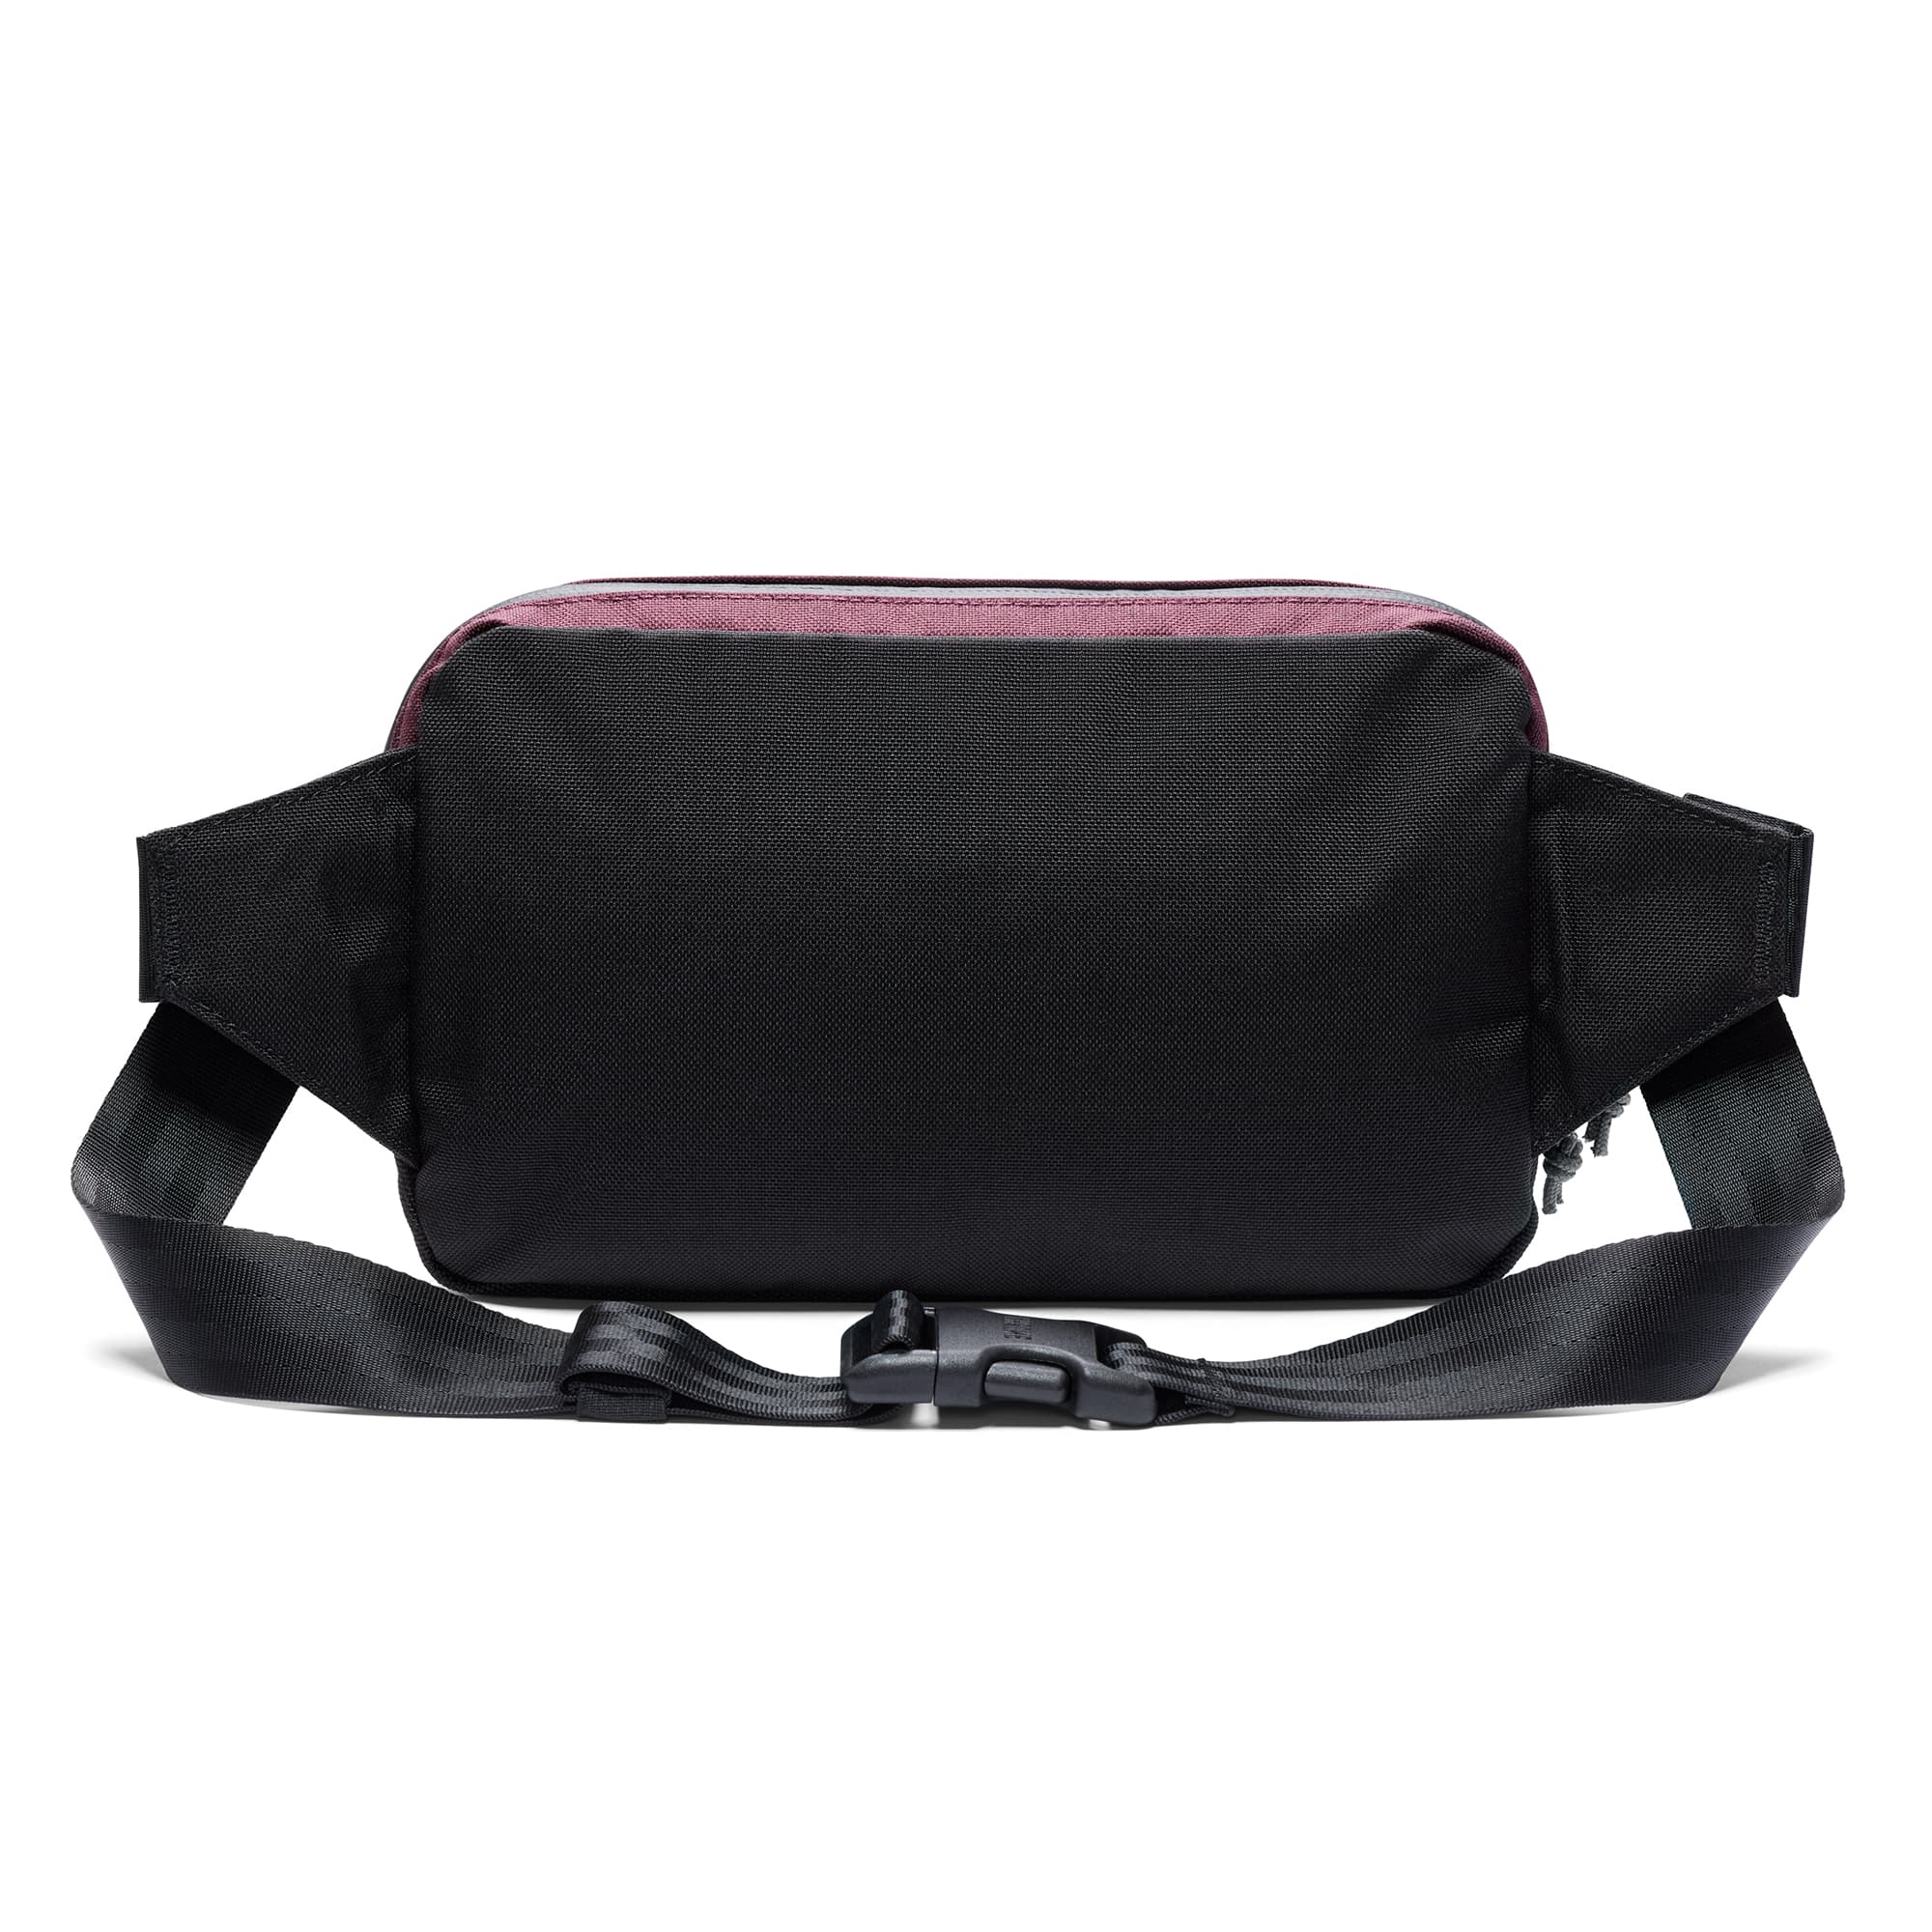 Ziptop Waistpack in purple color back view #color_royale